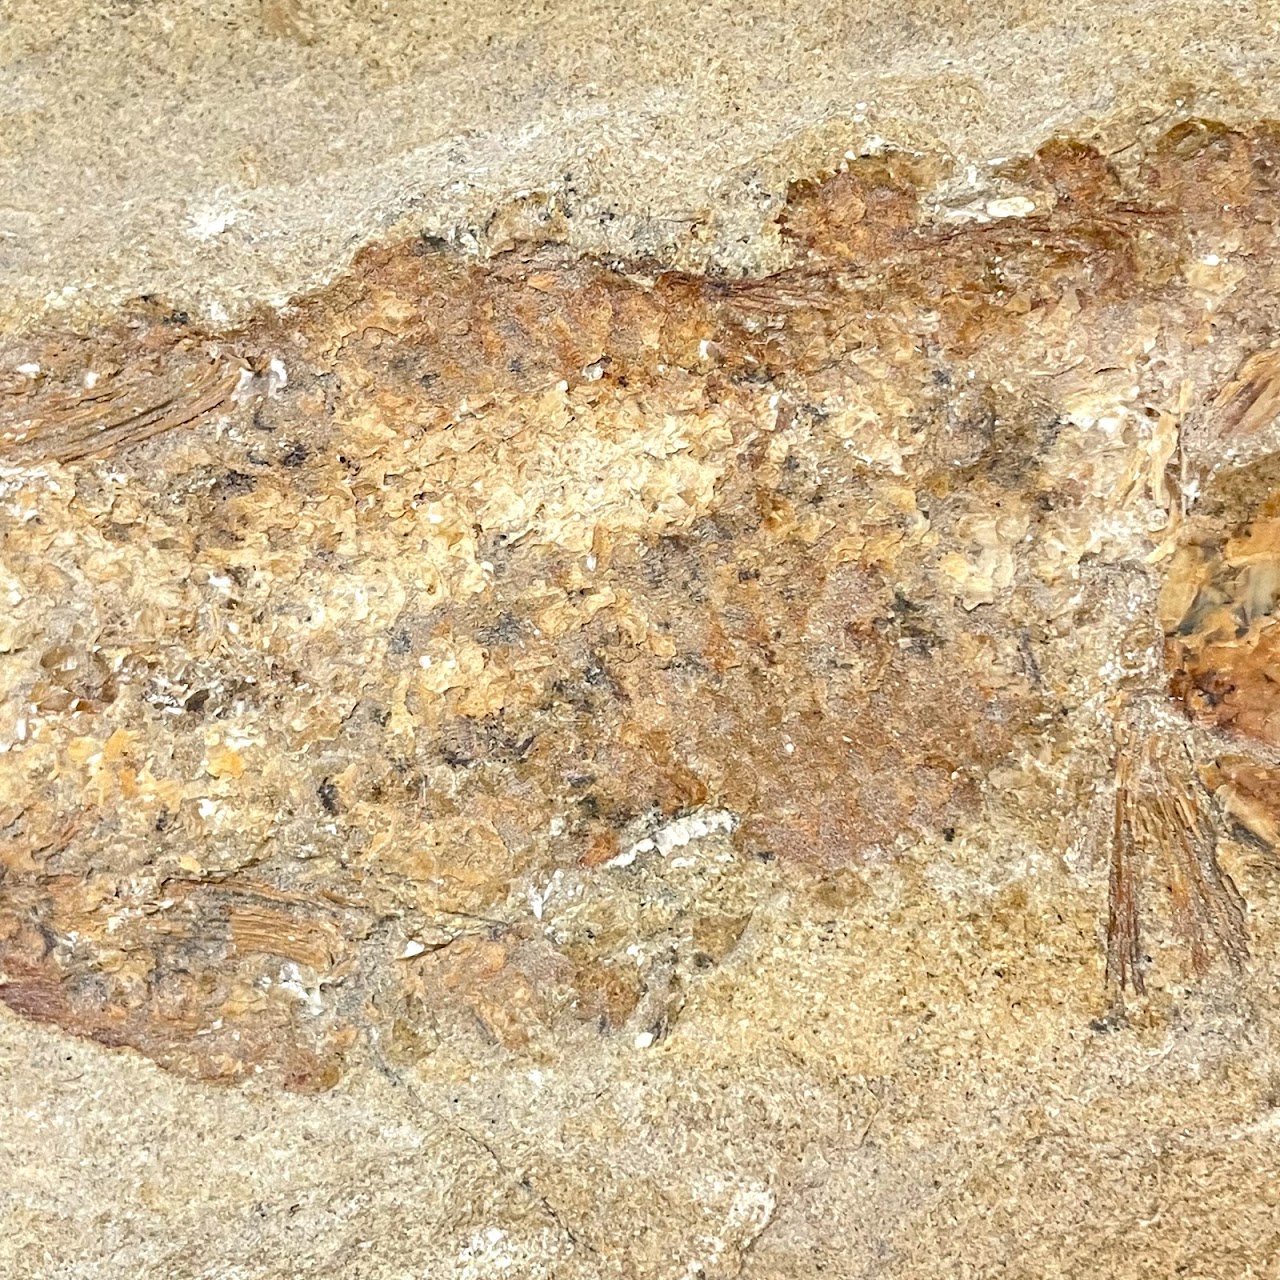 Fossil Fish Specimen